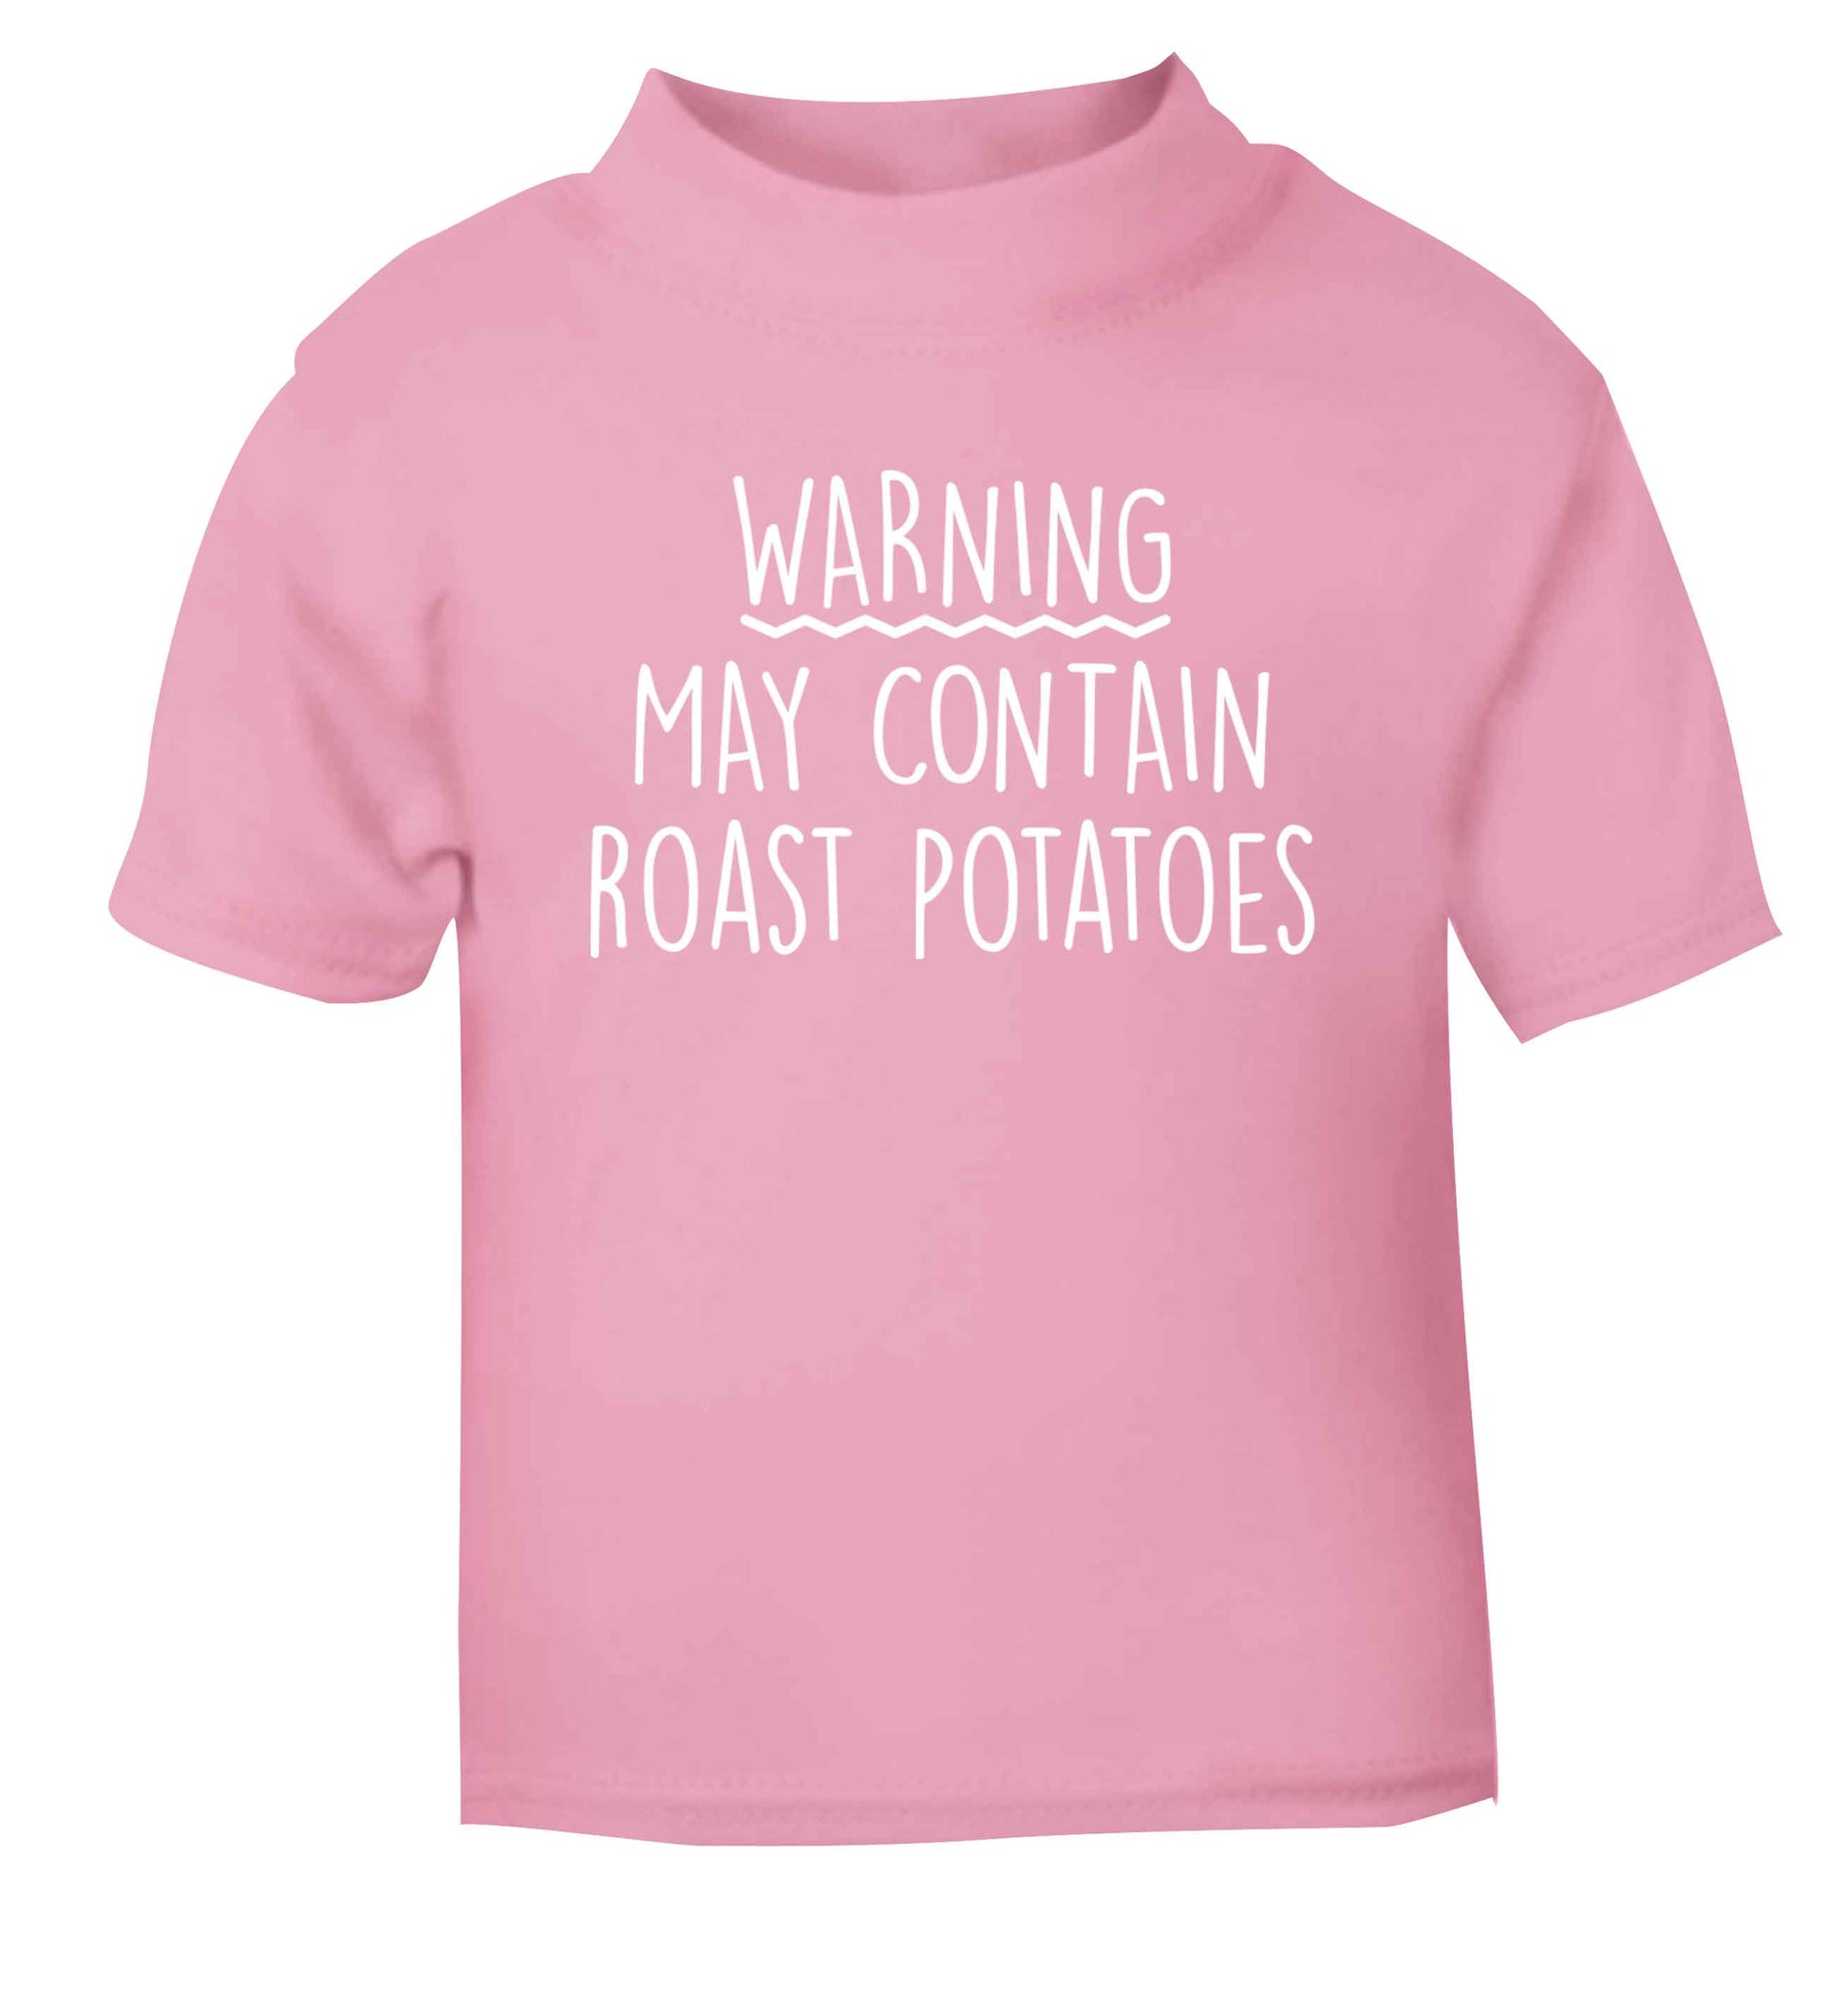 Warning may containg roast potatoes light pink baby toddler Tshirt 2 Years